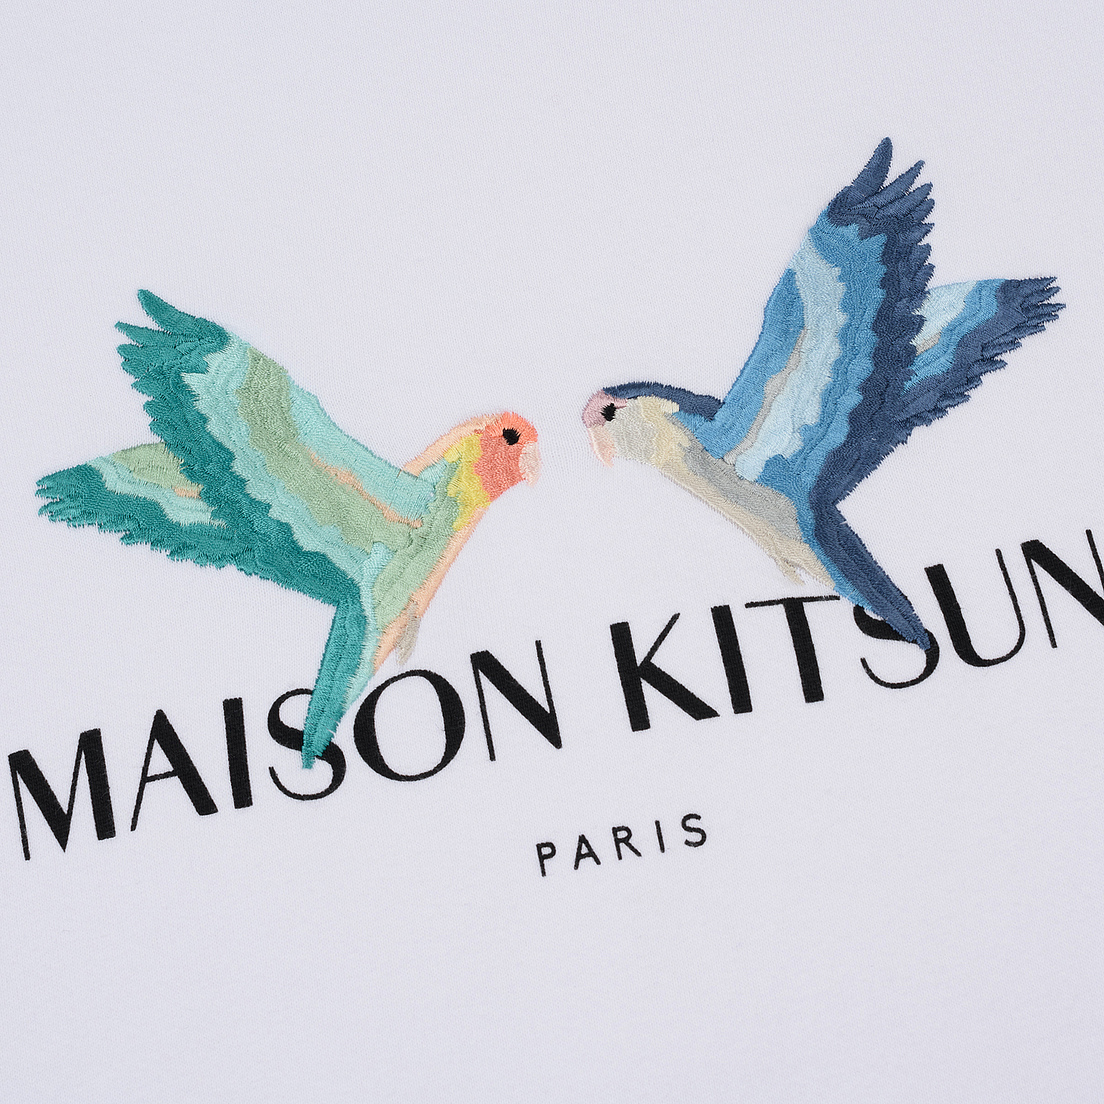 Maison Kitsune Женская толстовка Love Birds